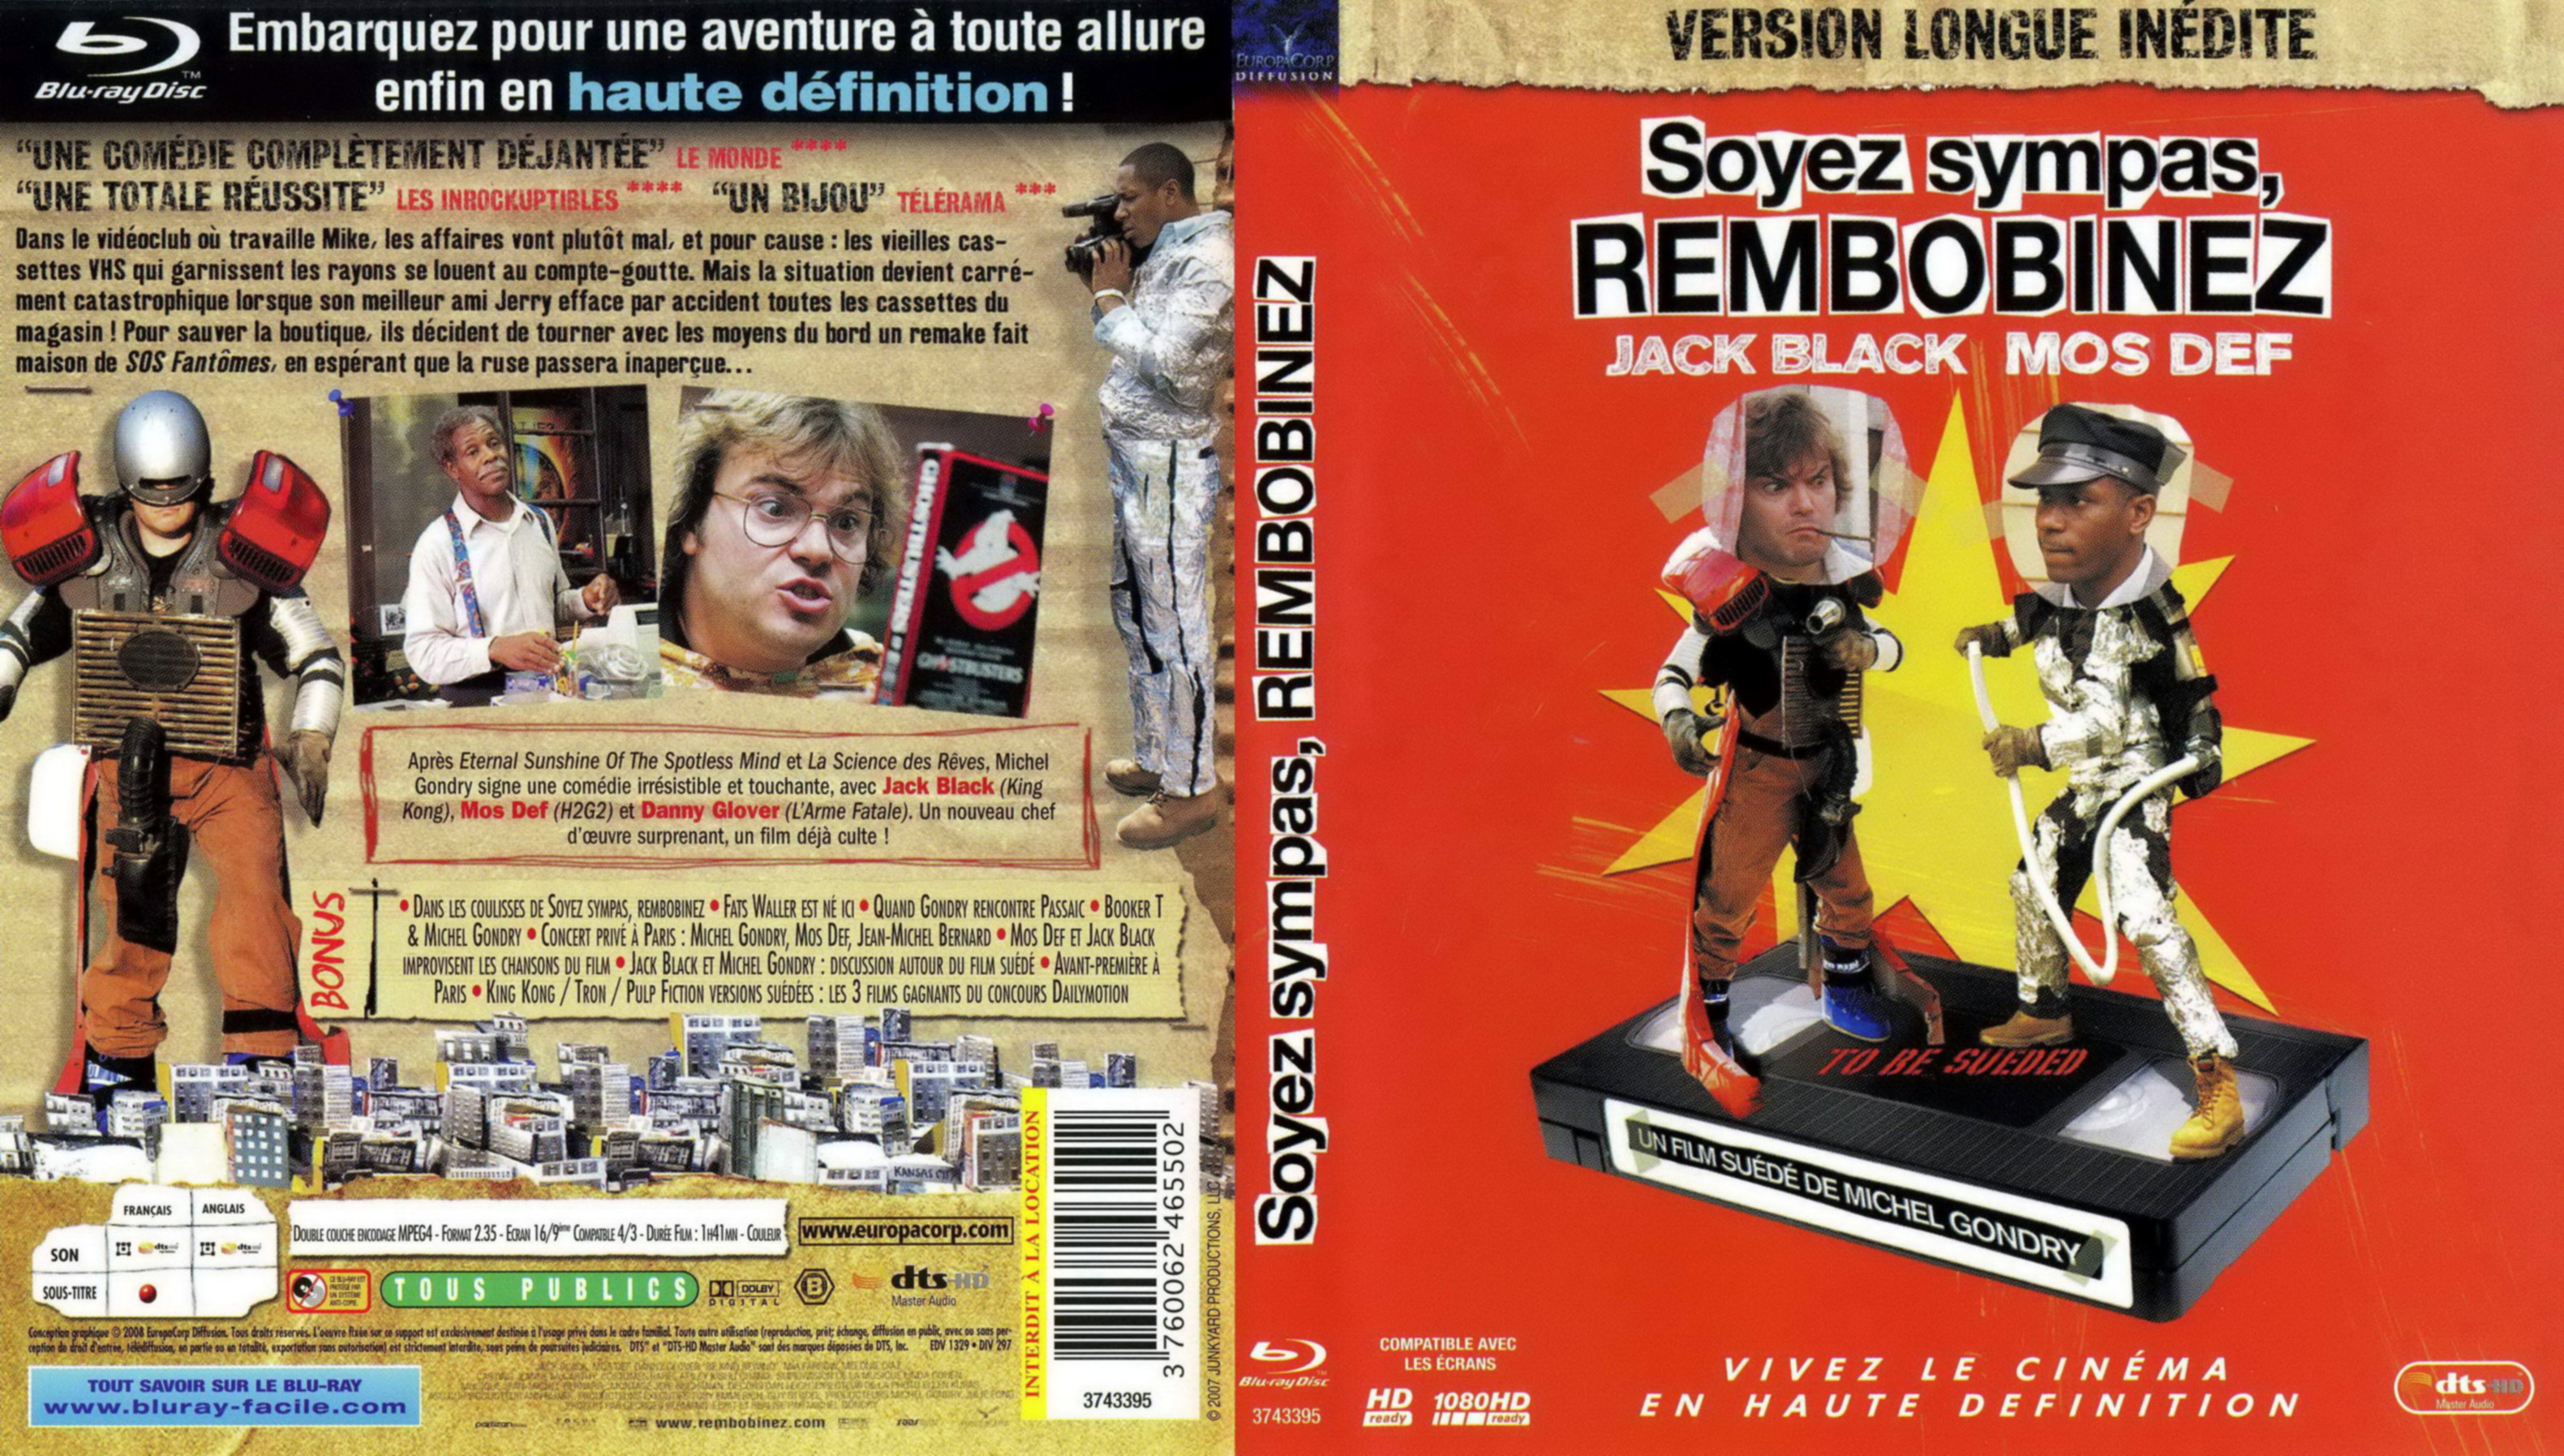 Jaquette DVD Soyez sympa rembobinez (BLU-RAY)